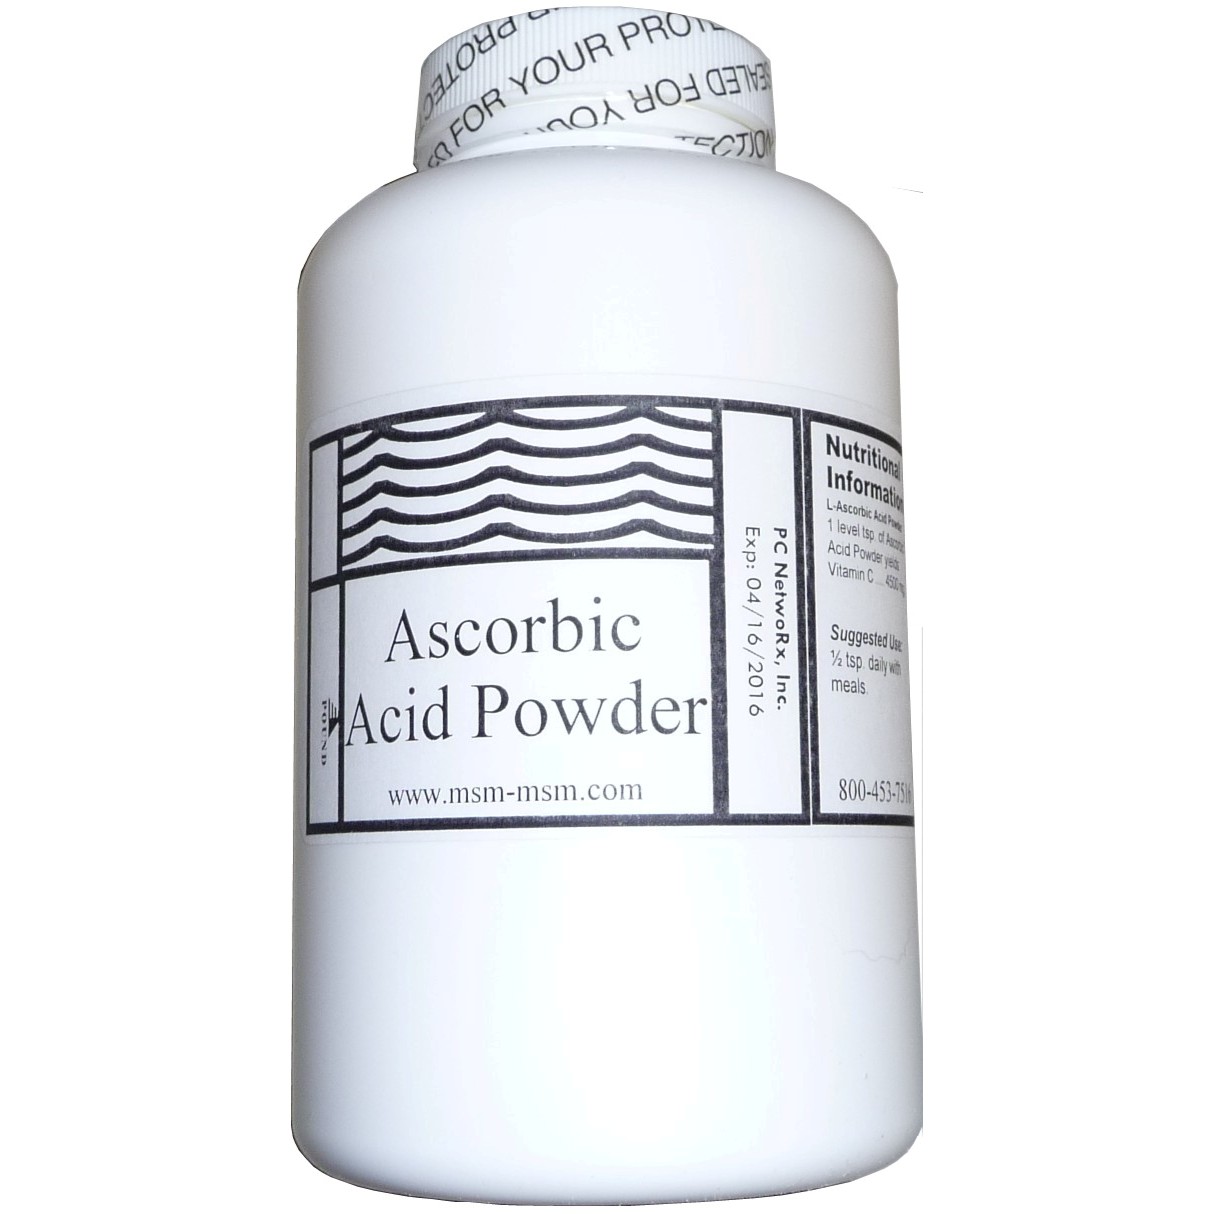  1 lb Bottle Ascorbic Acid Powder